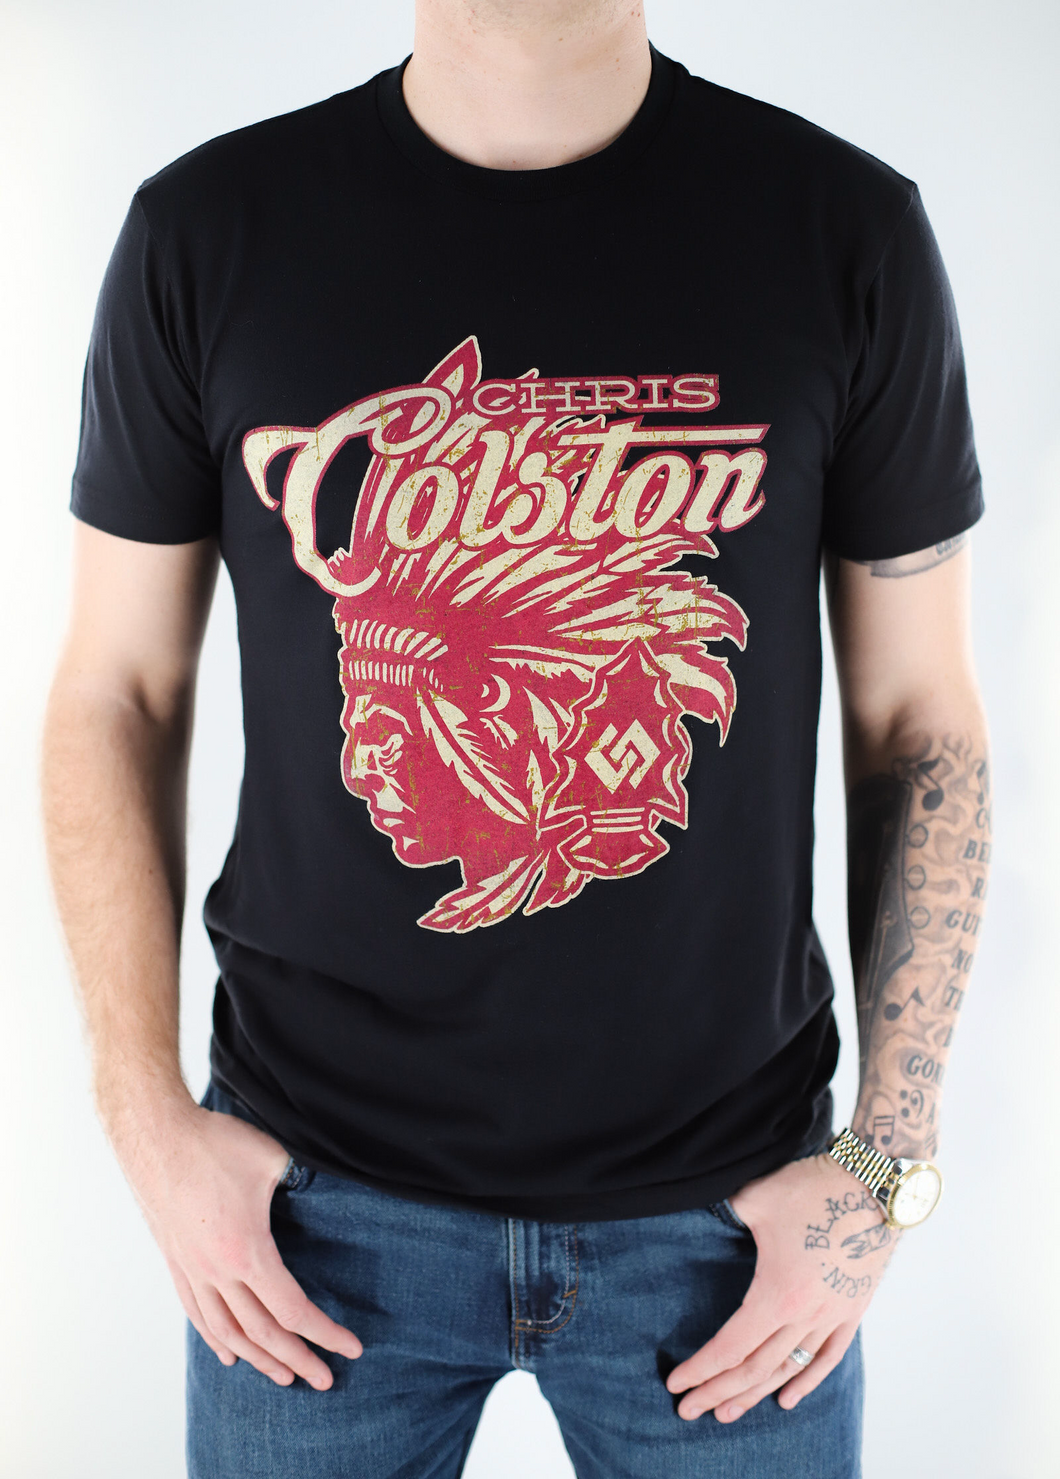 Chris Colston Black Headdress T-shirt